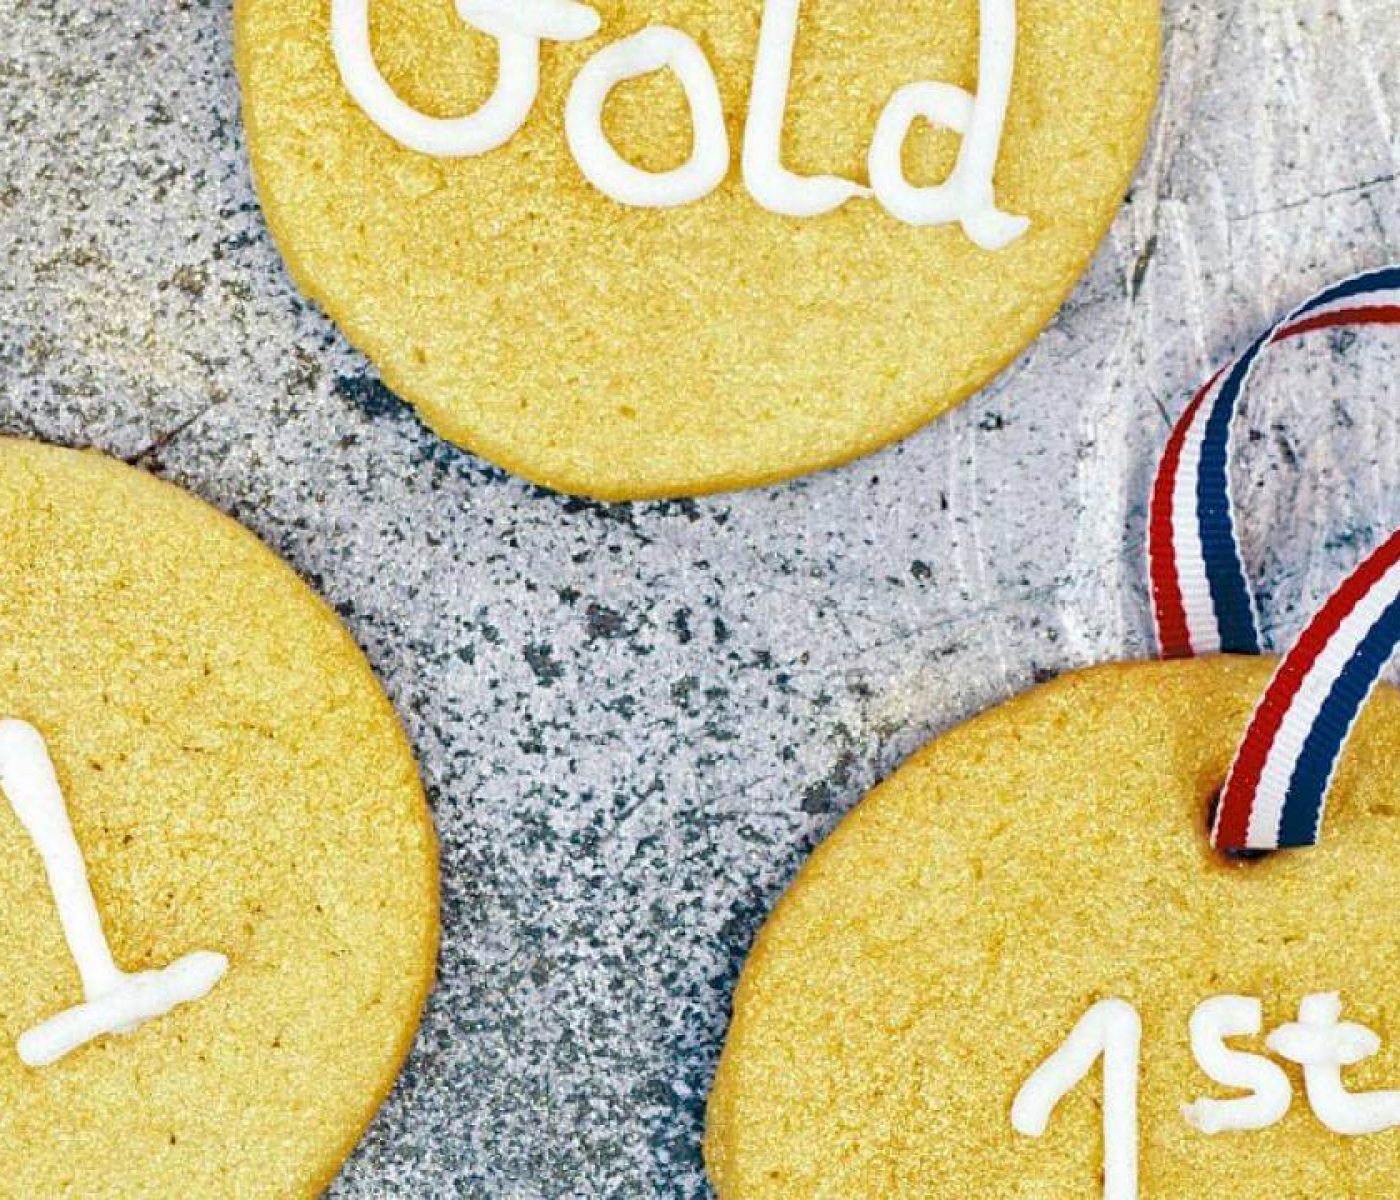 CroppedFocusedImage192072050-50-Gold-Medal-Biscuits-recipes